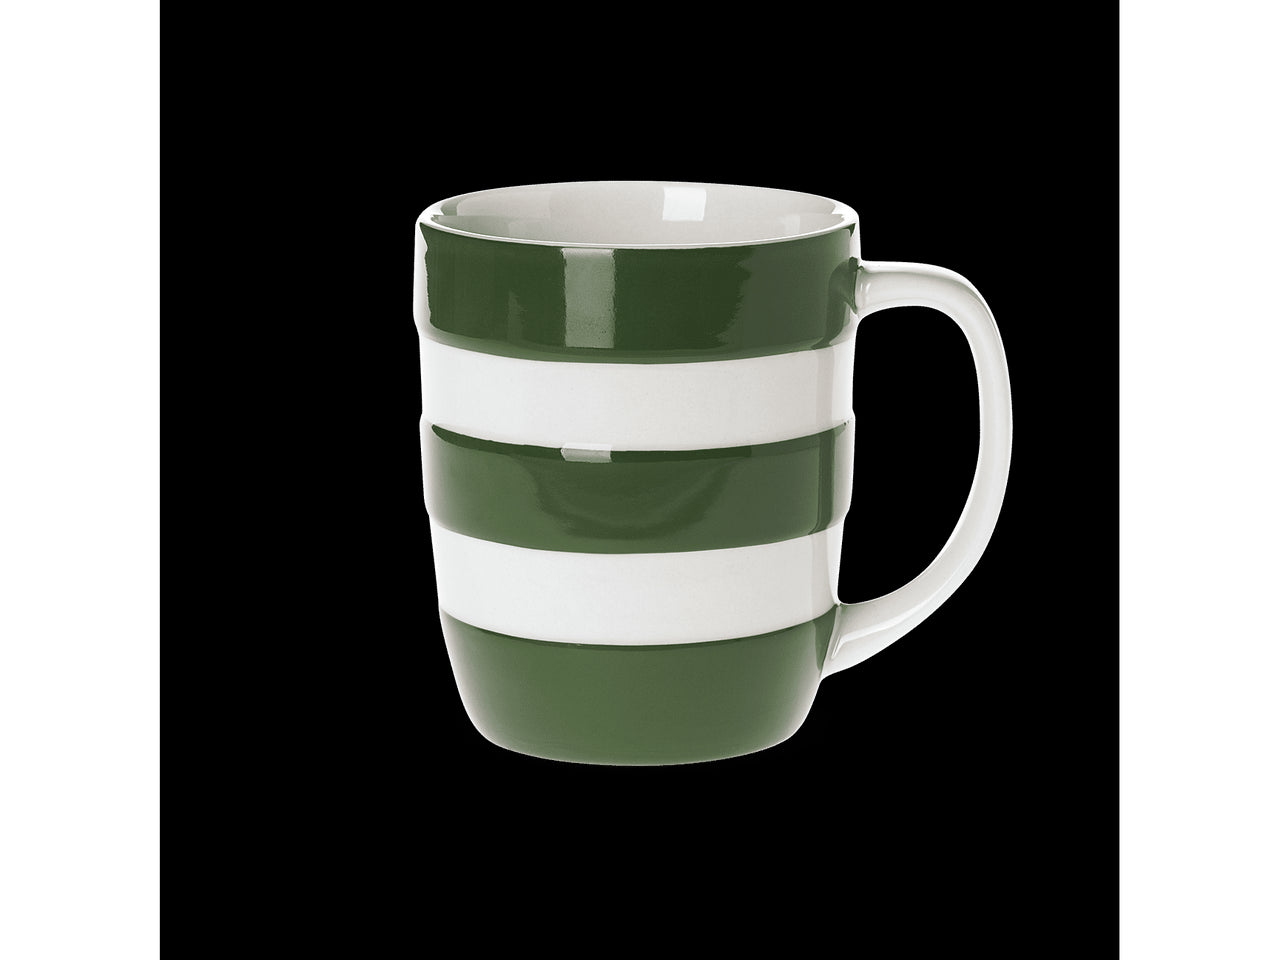 Cornishware 12 oz tapered mug - adder green